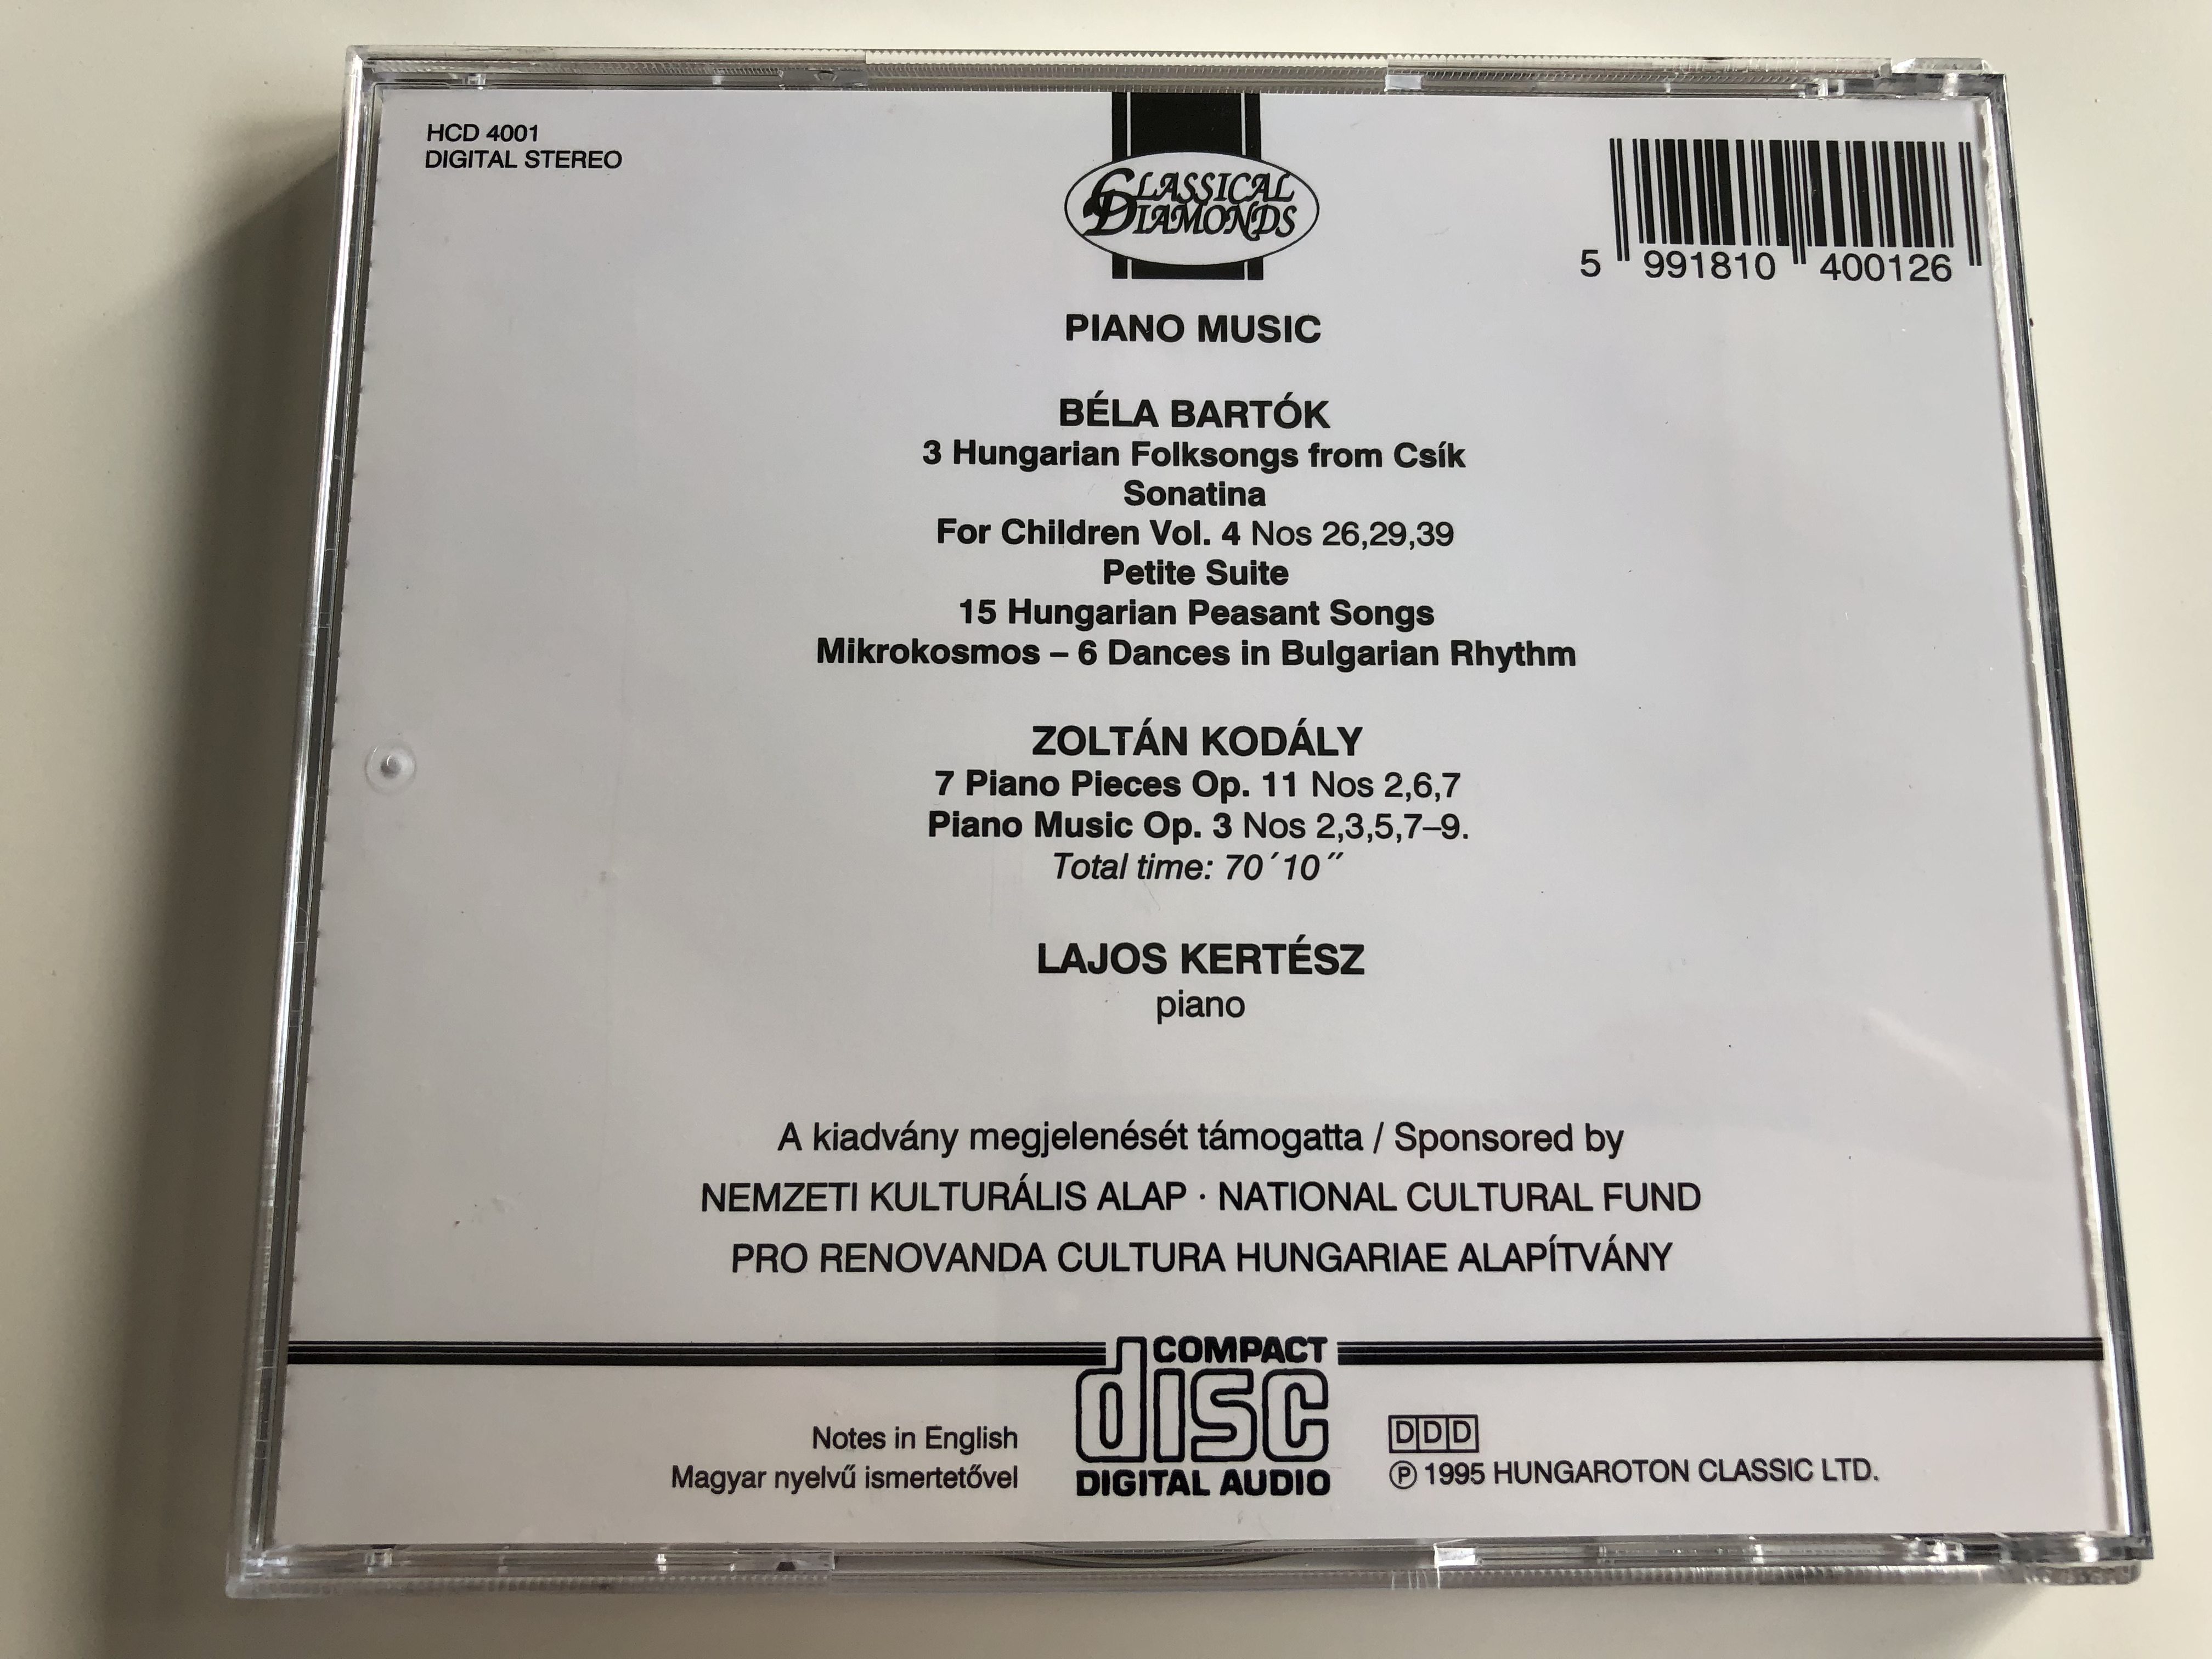 b-la-bart-k-zolt-n-kod-ly-piano-music-lajos-kert-sz-piano-hungaroton-classic-audio-cd-1995-hcd-4001-8-.jpg